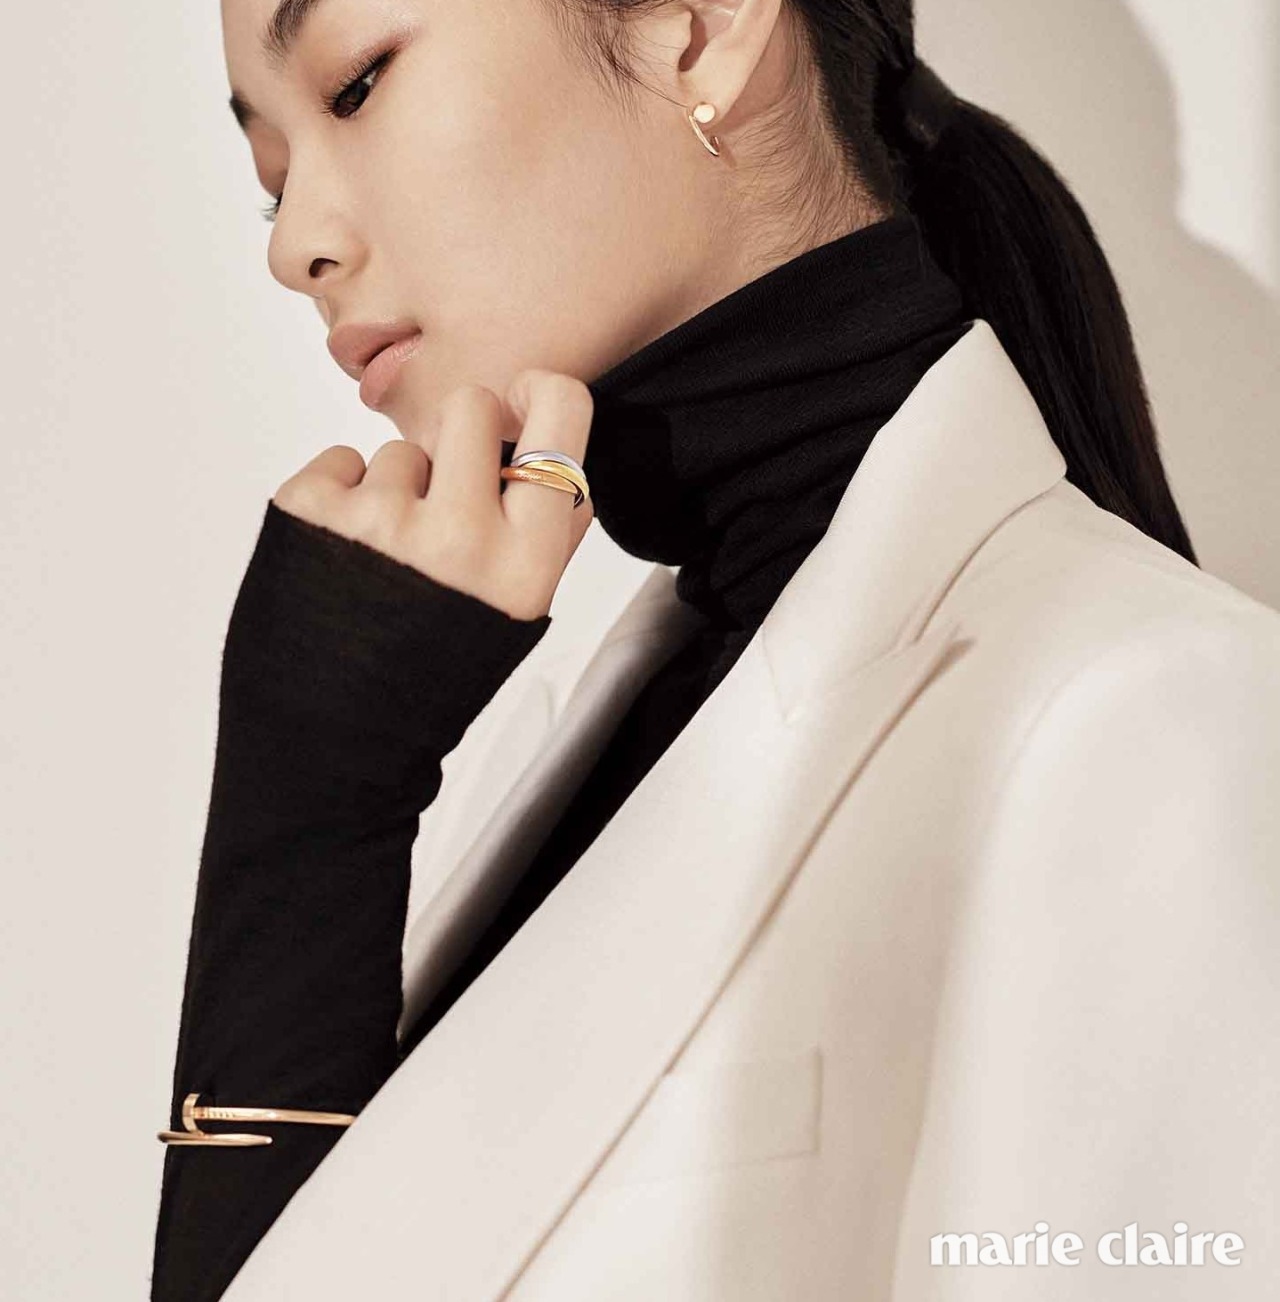 koreanmodel:Kim Eun Hae by Kim Hyung Sik for Marie Claire Korea Jan 2017